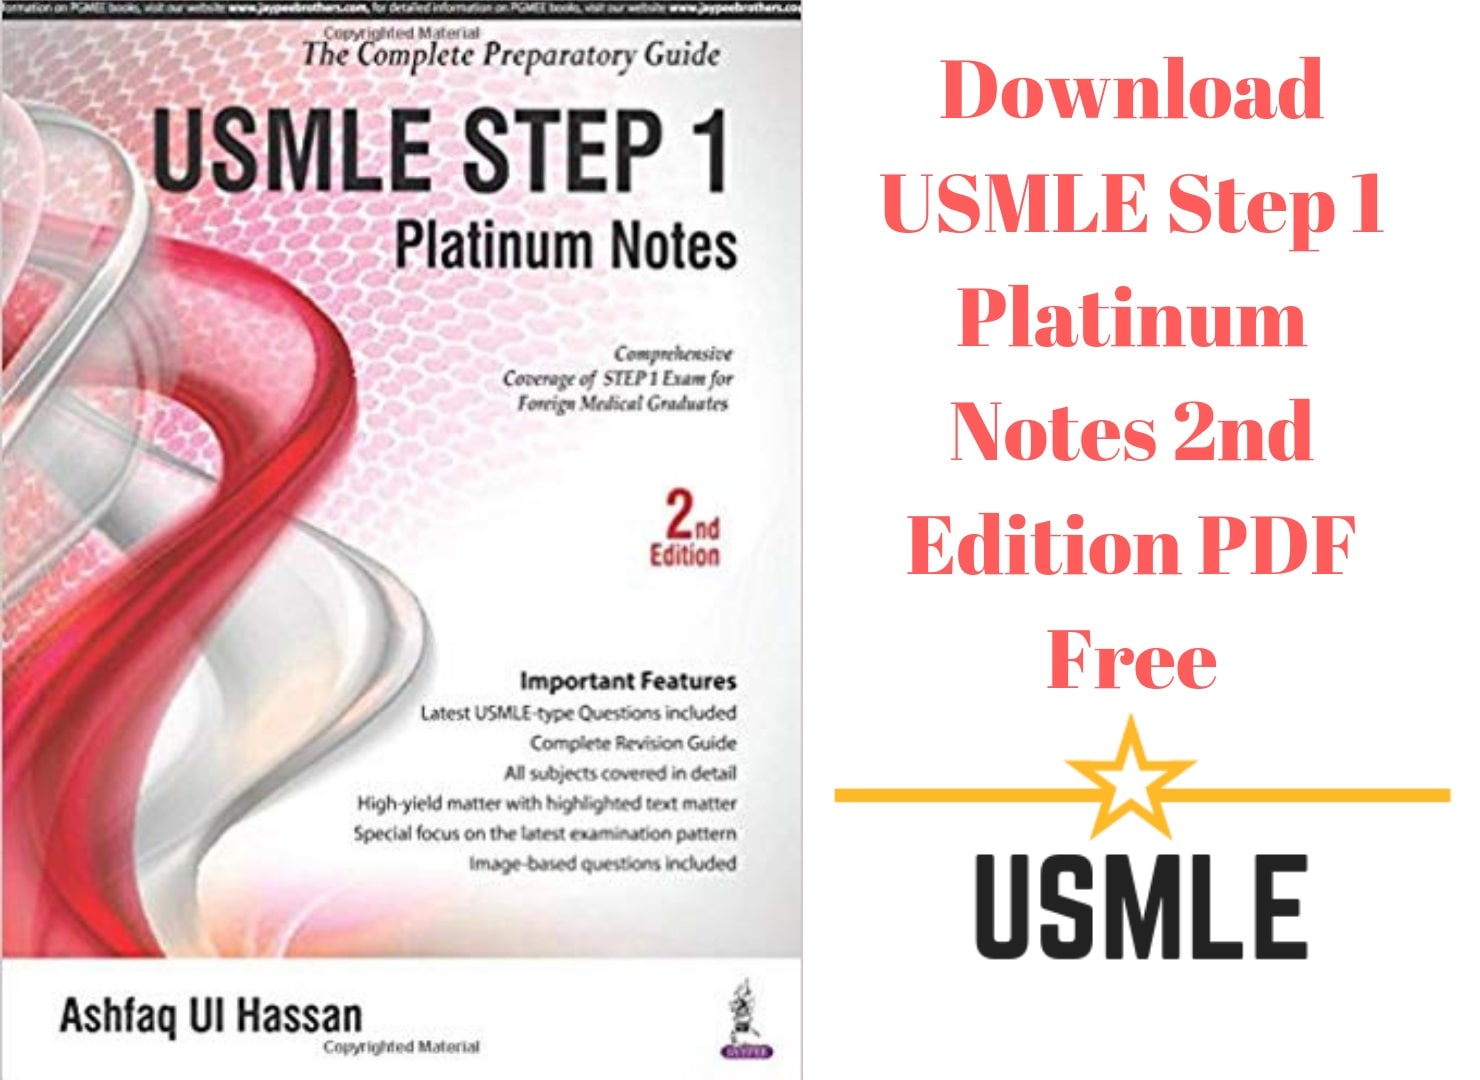 USMLE Step 1 Platinum Notes 2nd Edition